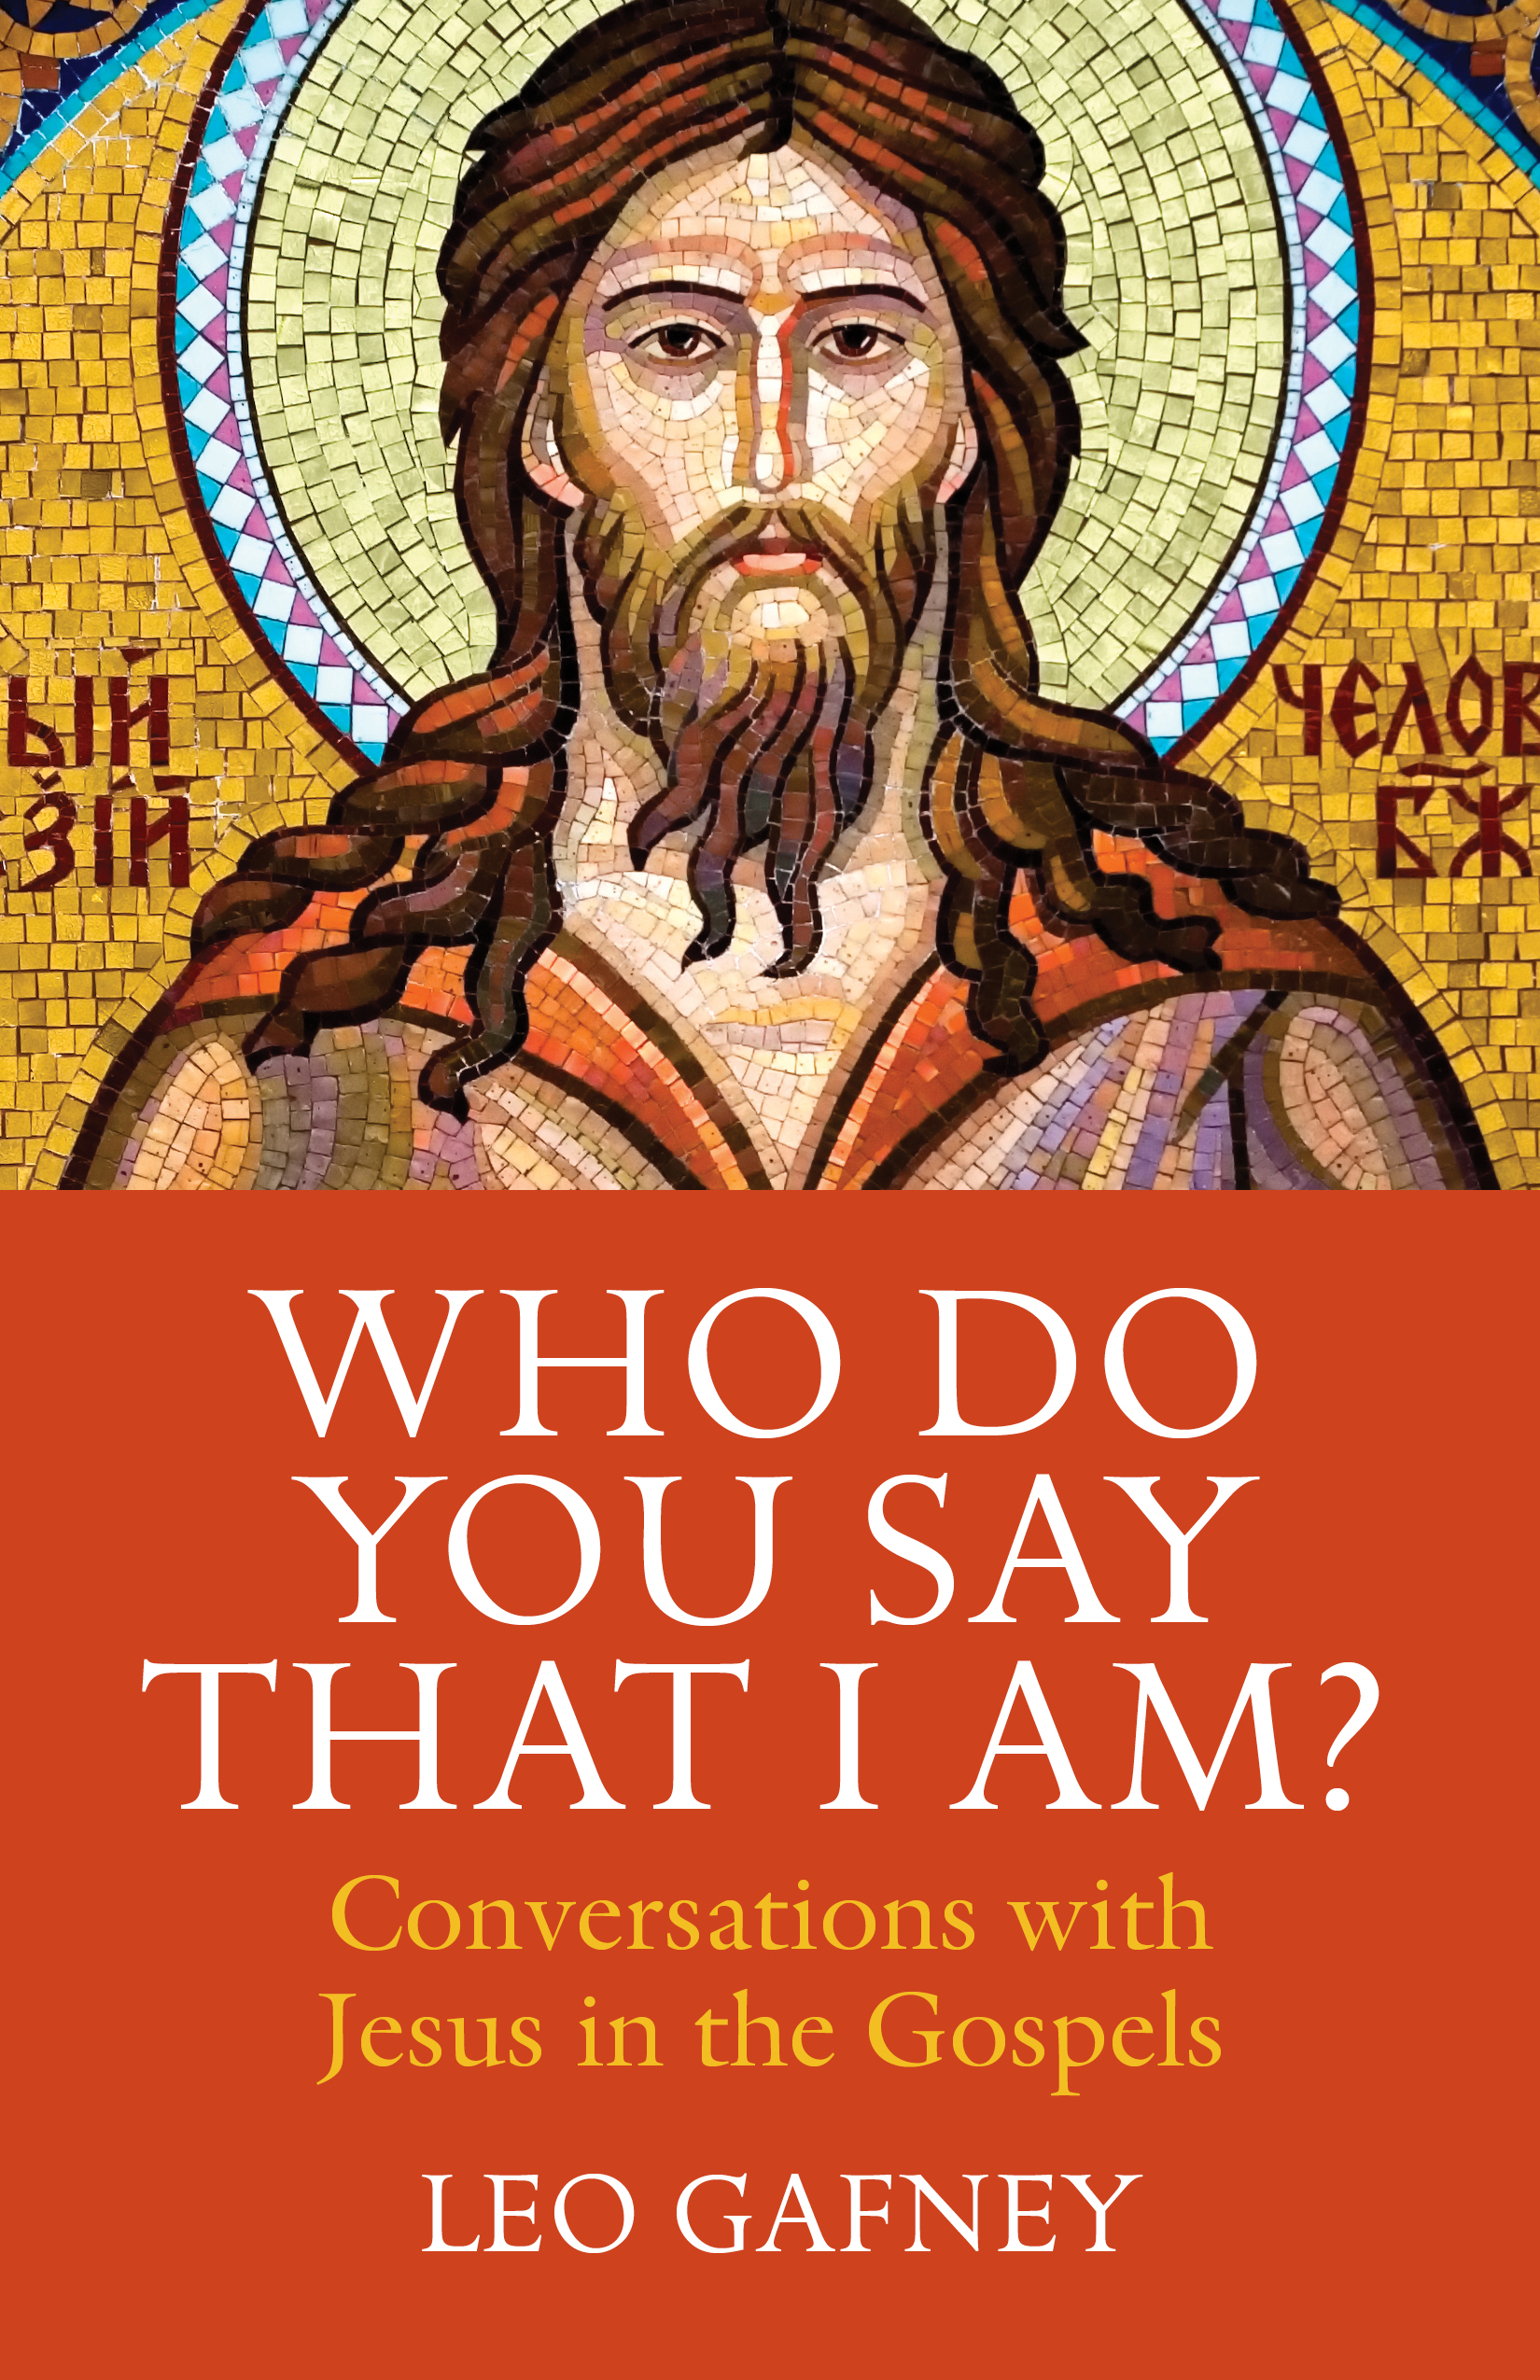 Catholic Book, Who Do You Say I am? by Leo Gafney